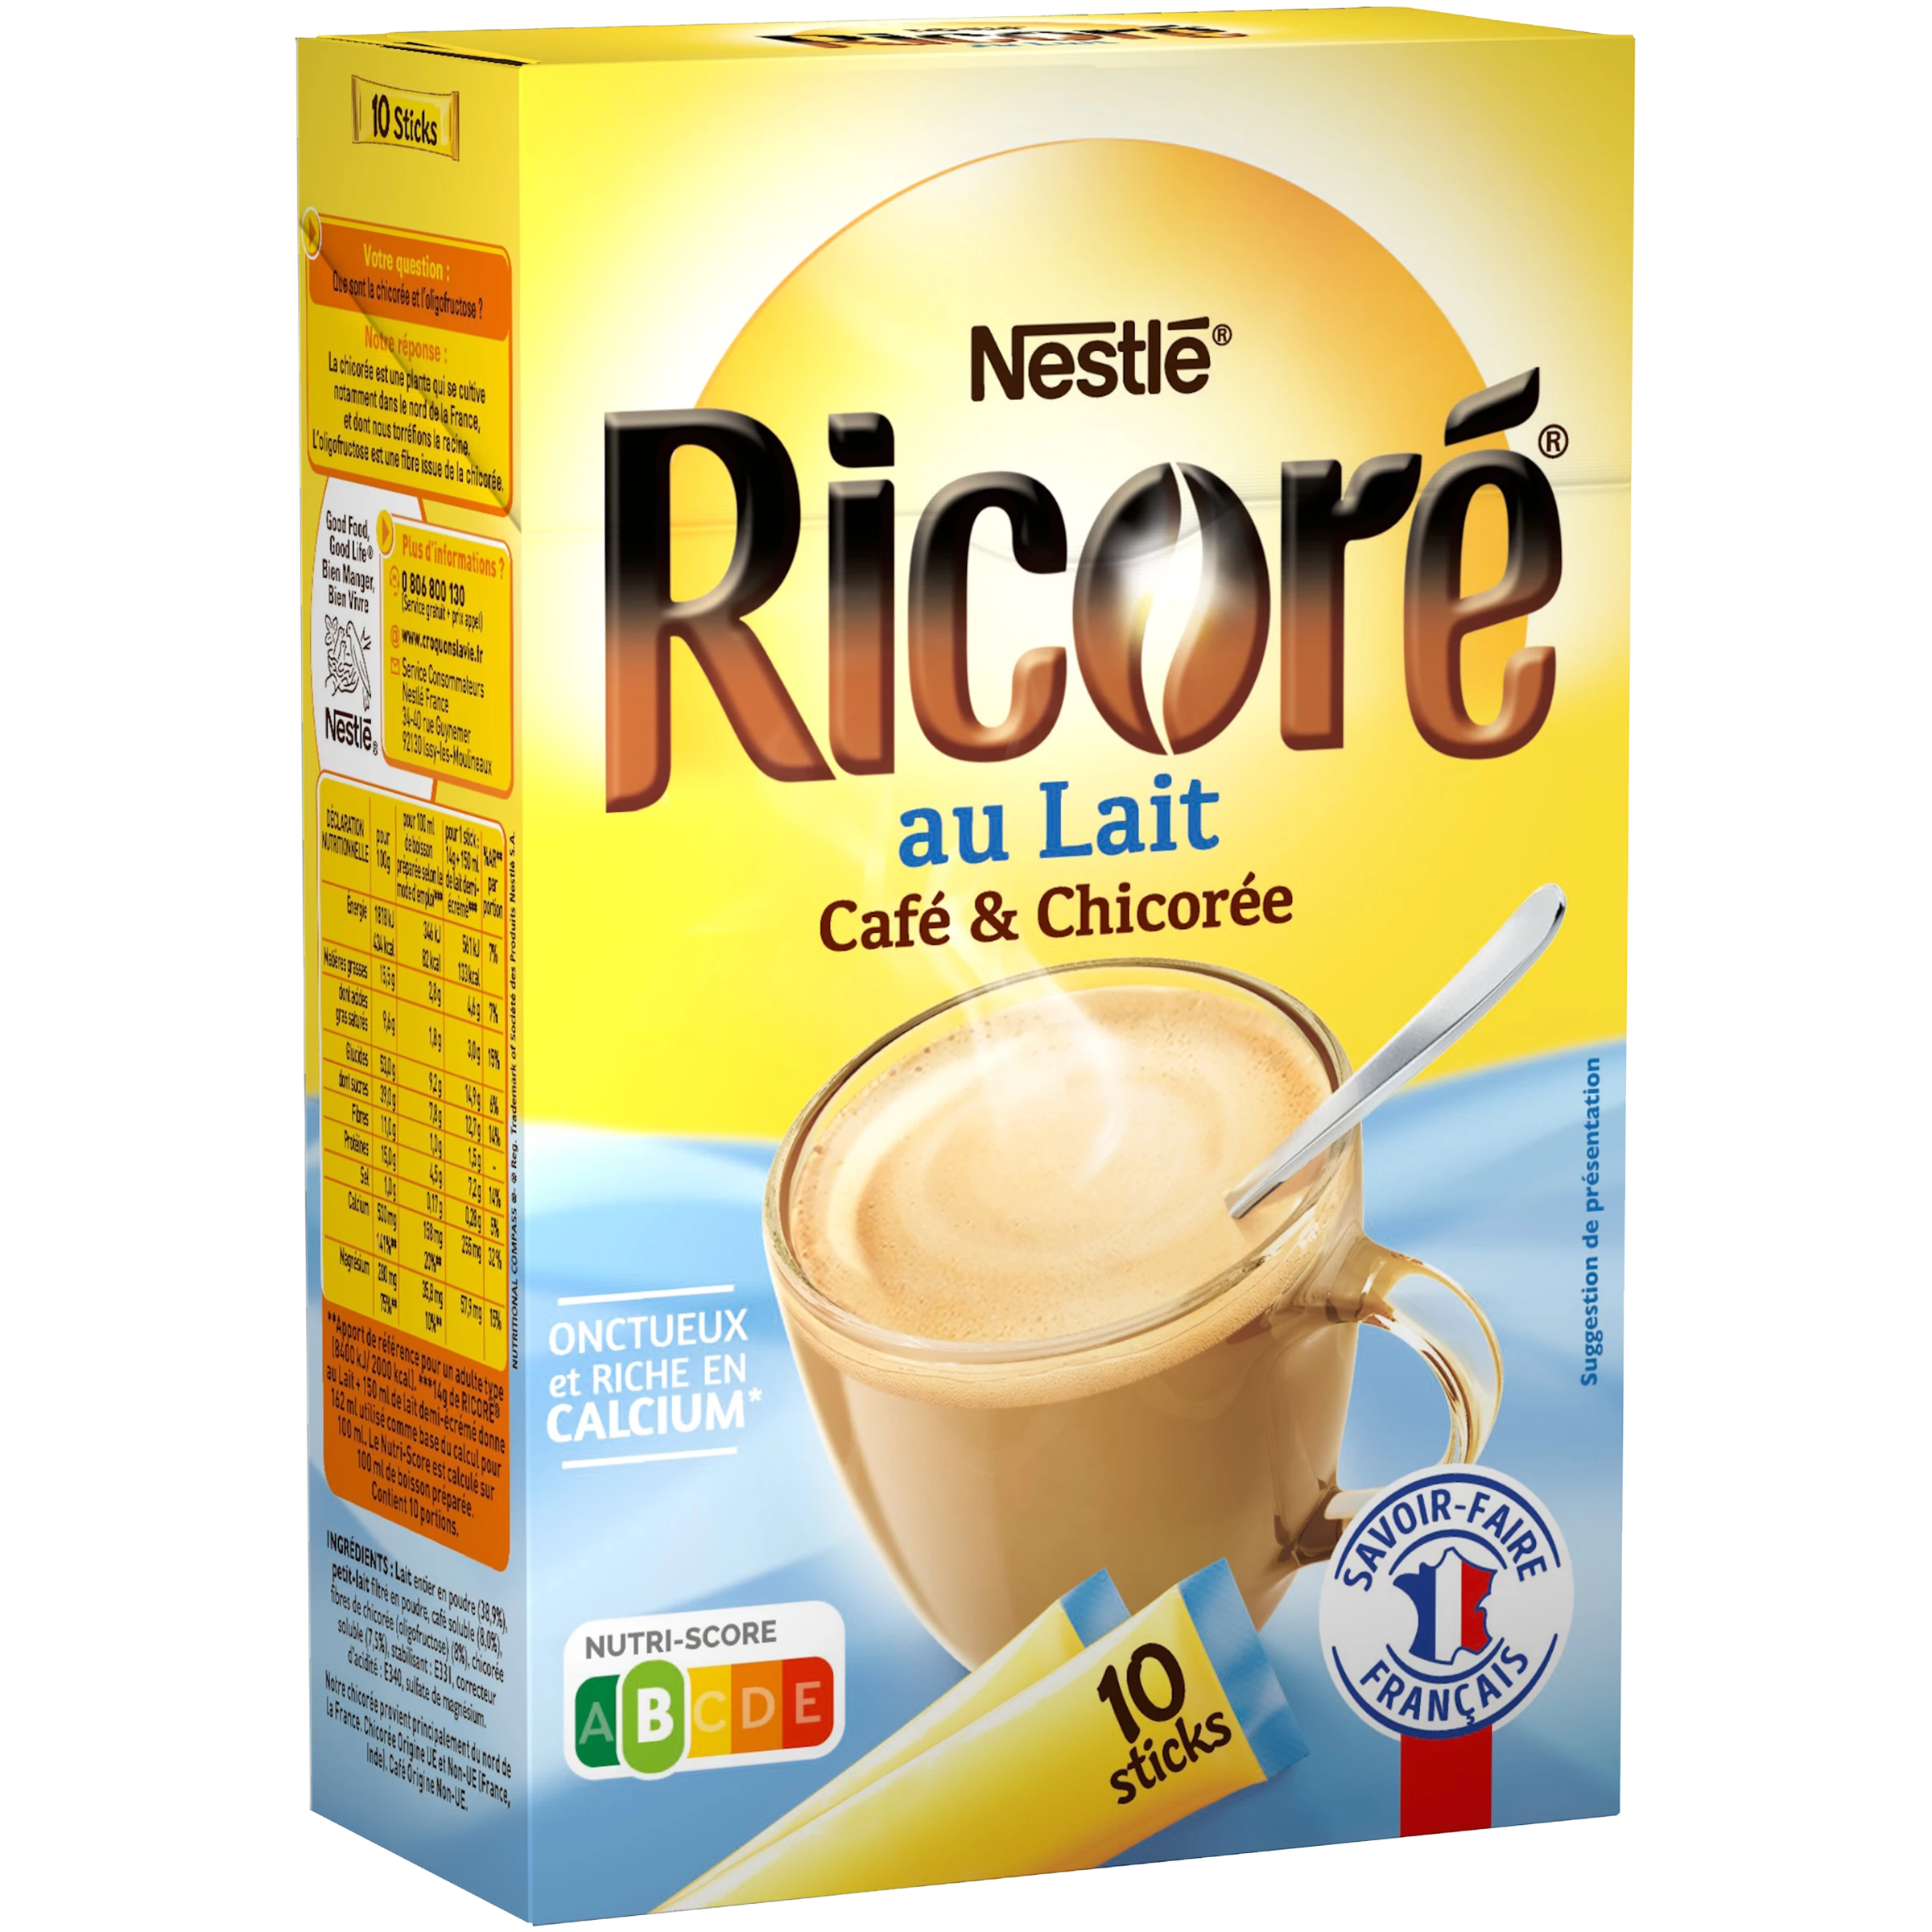 Koffie en witlof met Ricoré-melk; 10 stokken; 140g - NESTEL